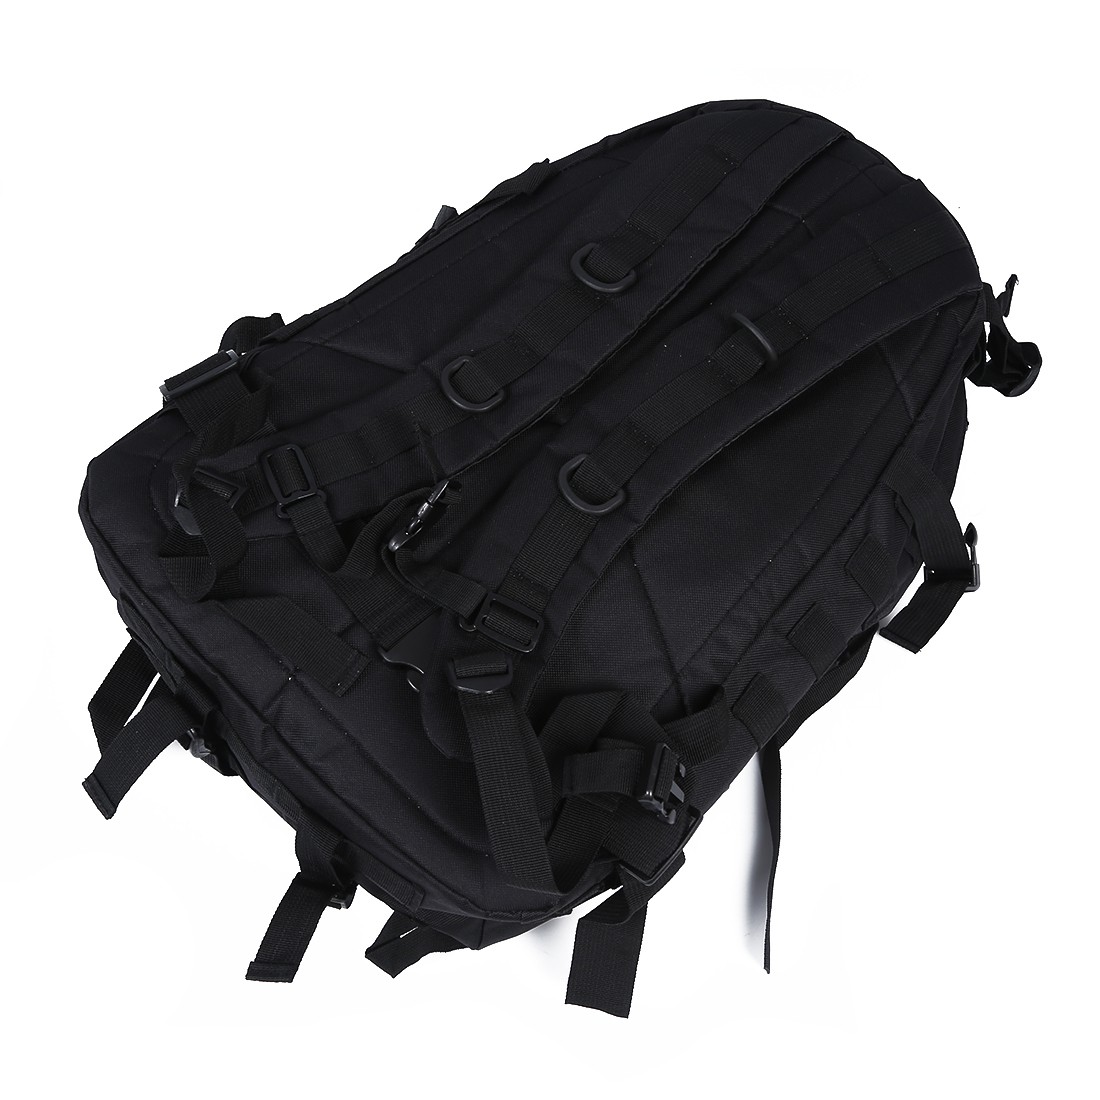 Military Tactical Backpack backpack camping trip Hiking bag 40L Black